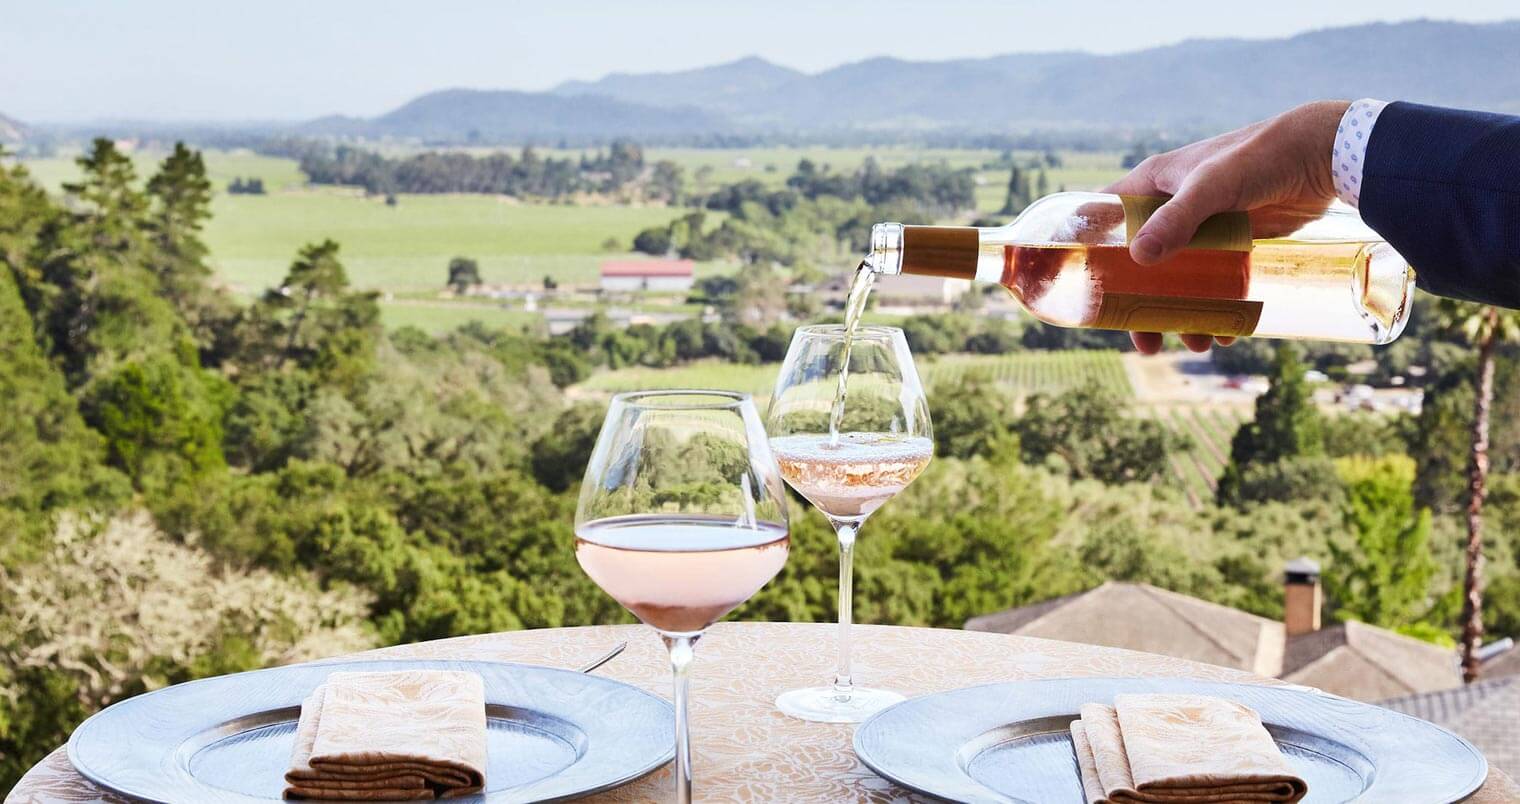 Auberge du Soleil, elegant table pouring wine over the vineyard